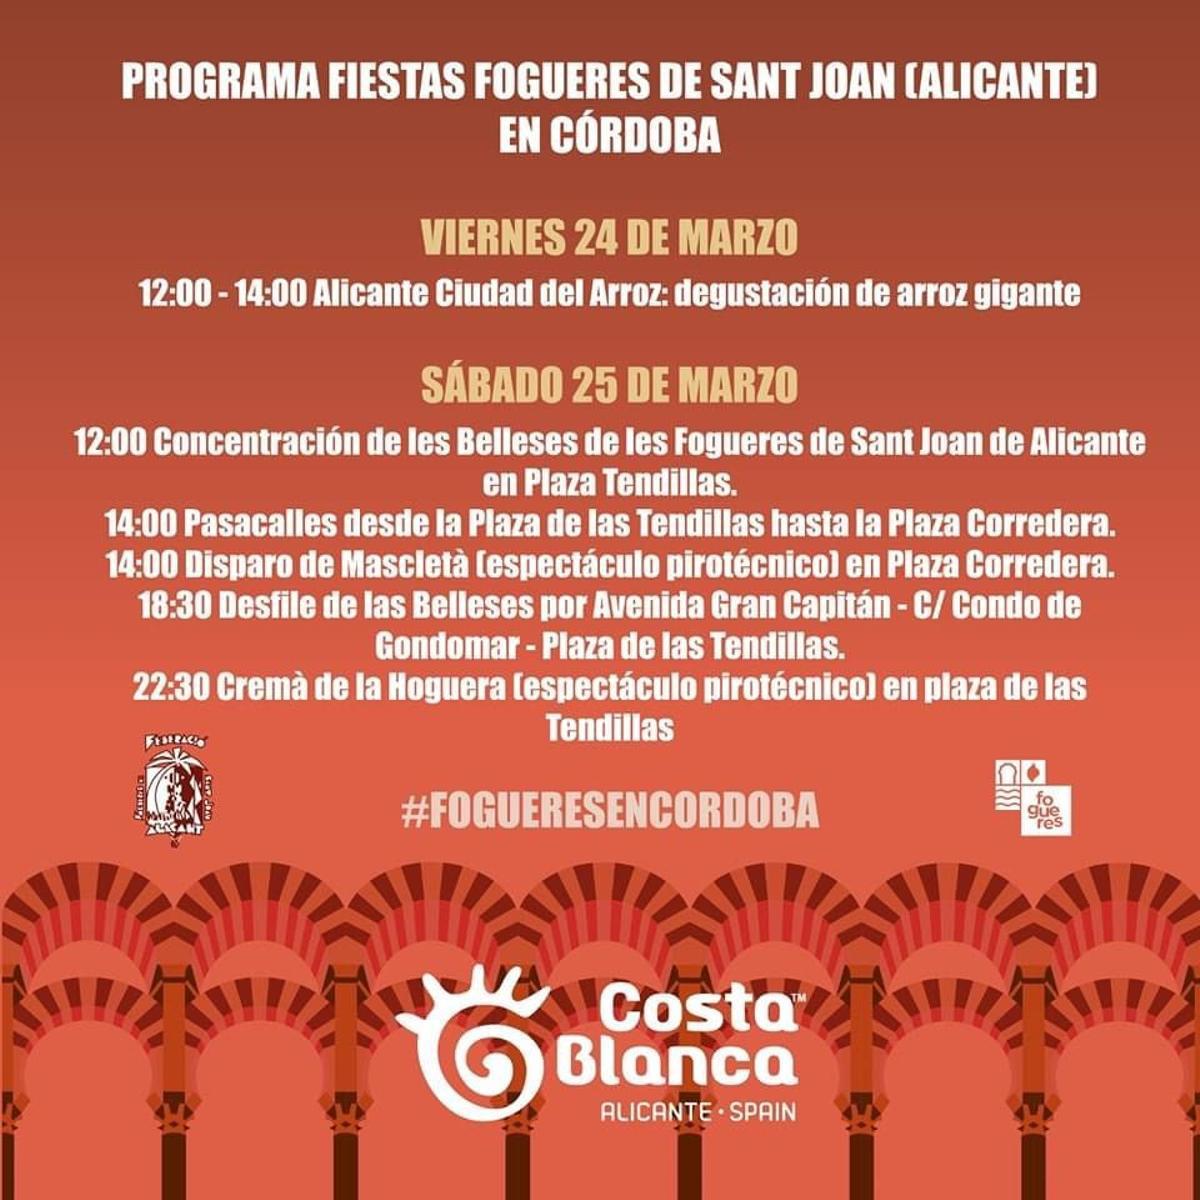 Programa de las fiestas Fogueres de Sant Joan en Córdoba.